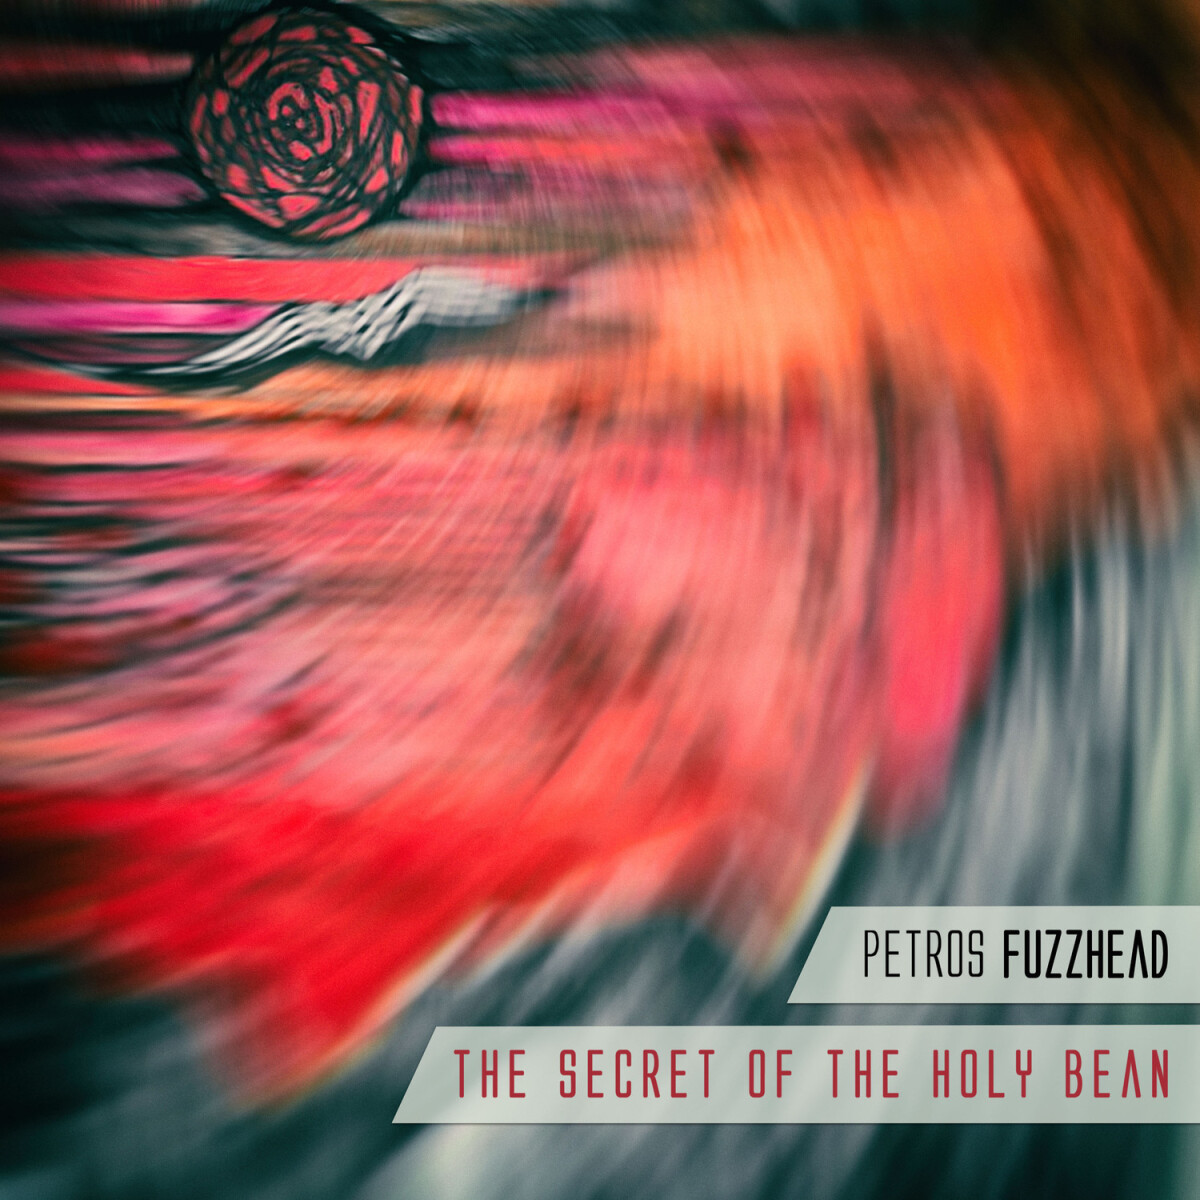 petros-fuzzhead-the-secret-of-the-holy-bean-single-artwork